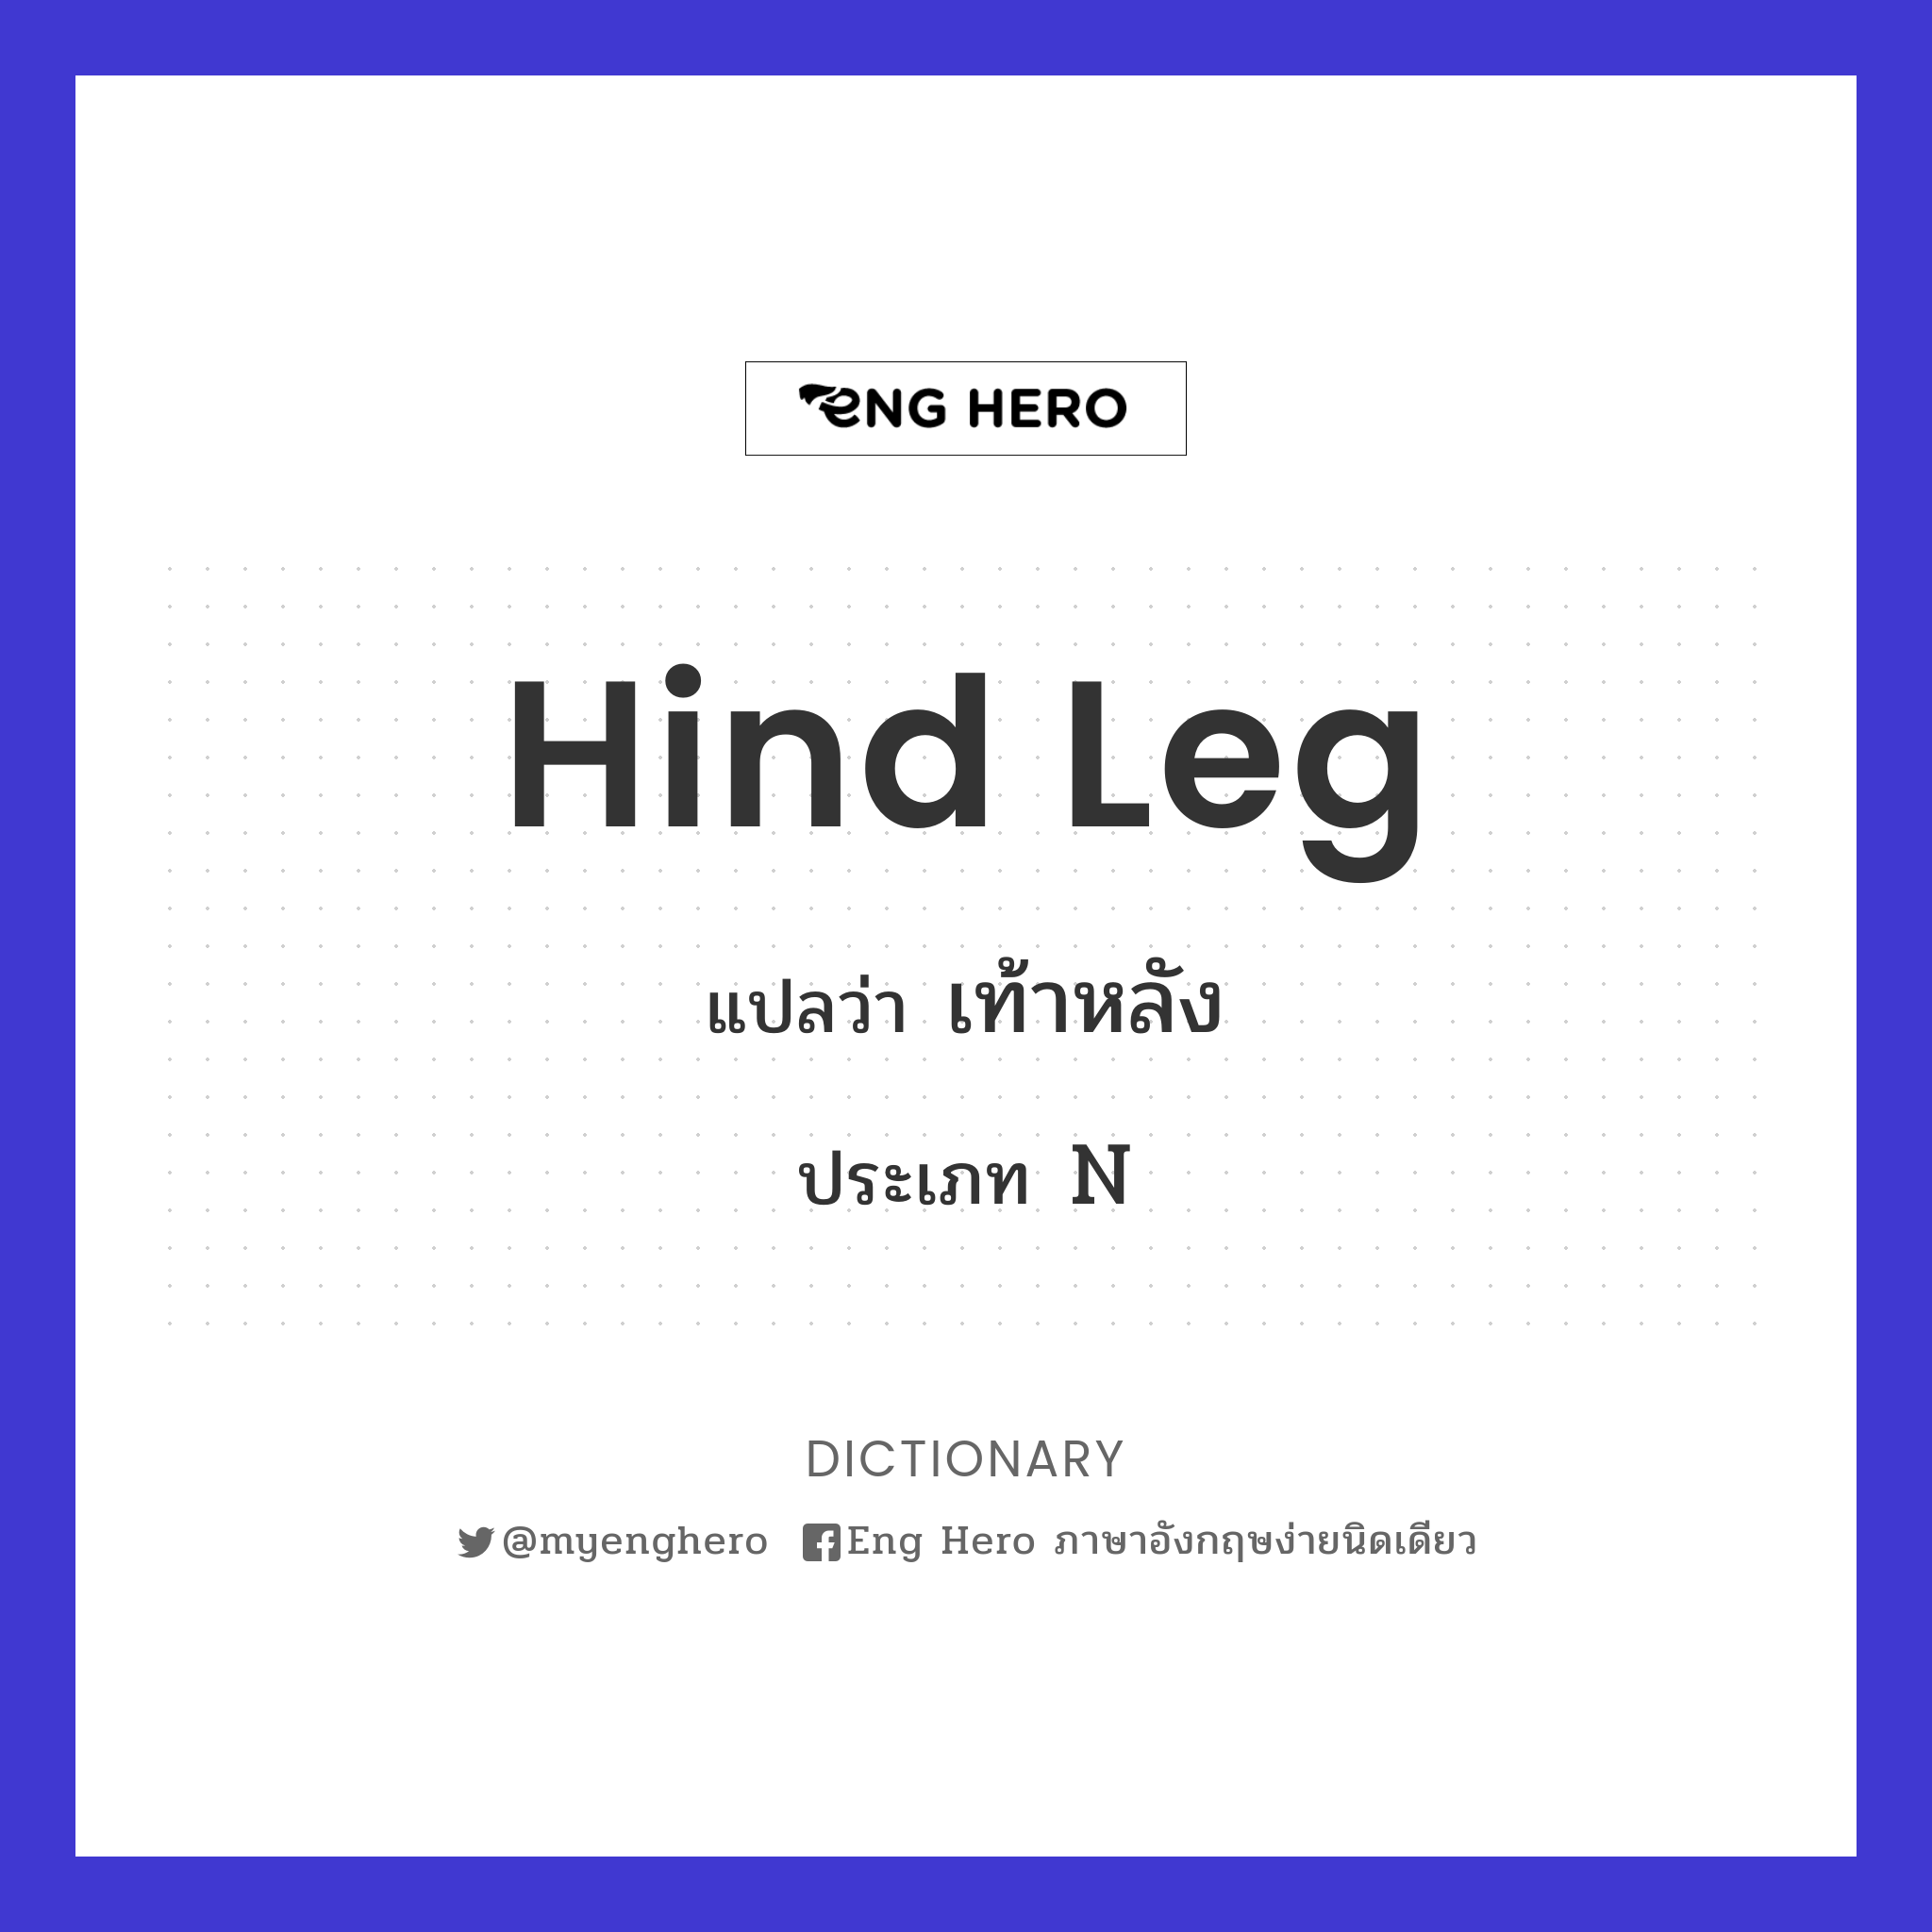 hind leg